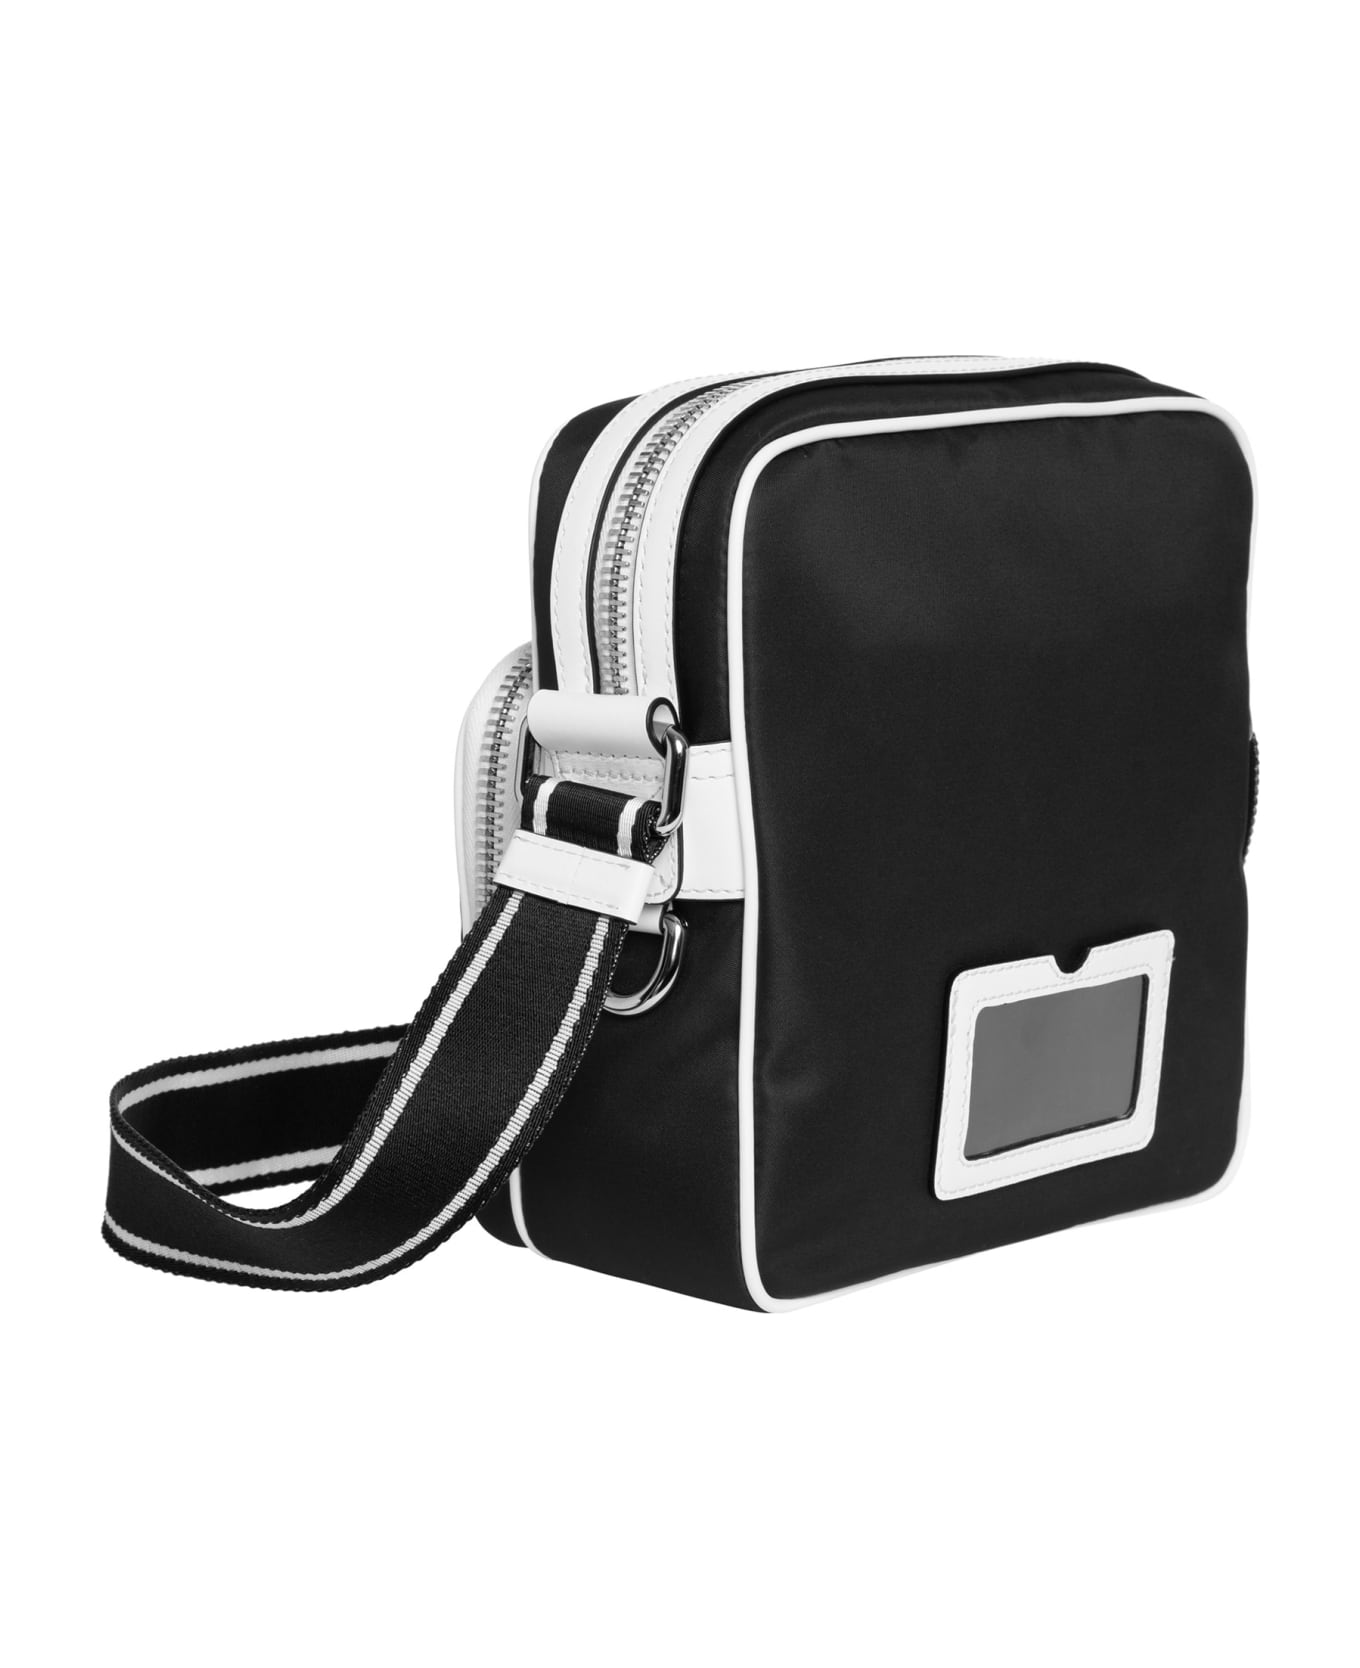 Moschino X Smiley Leather Crossbody Bag - Black